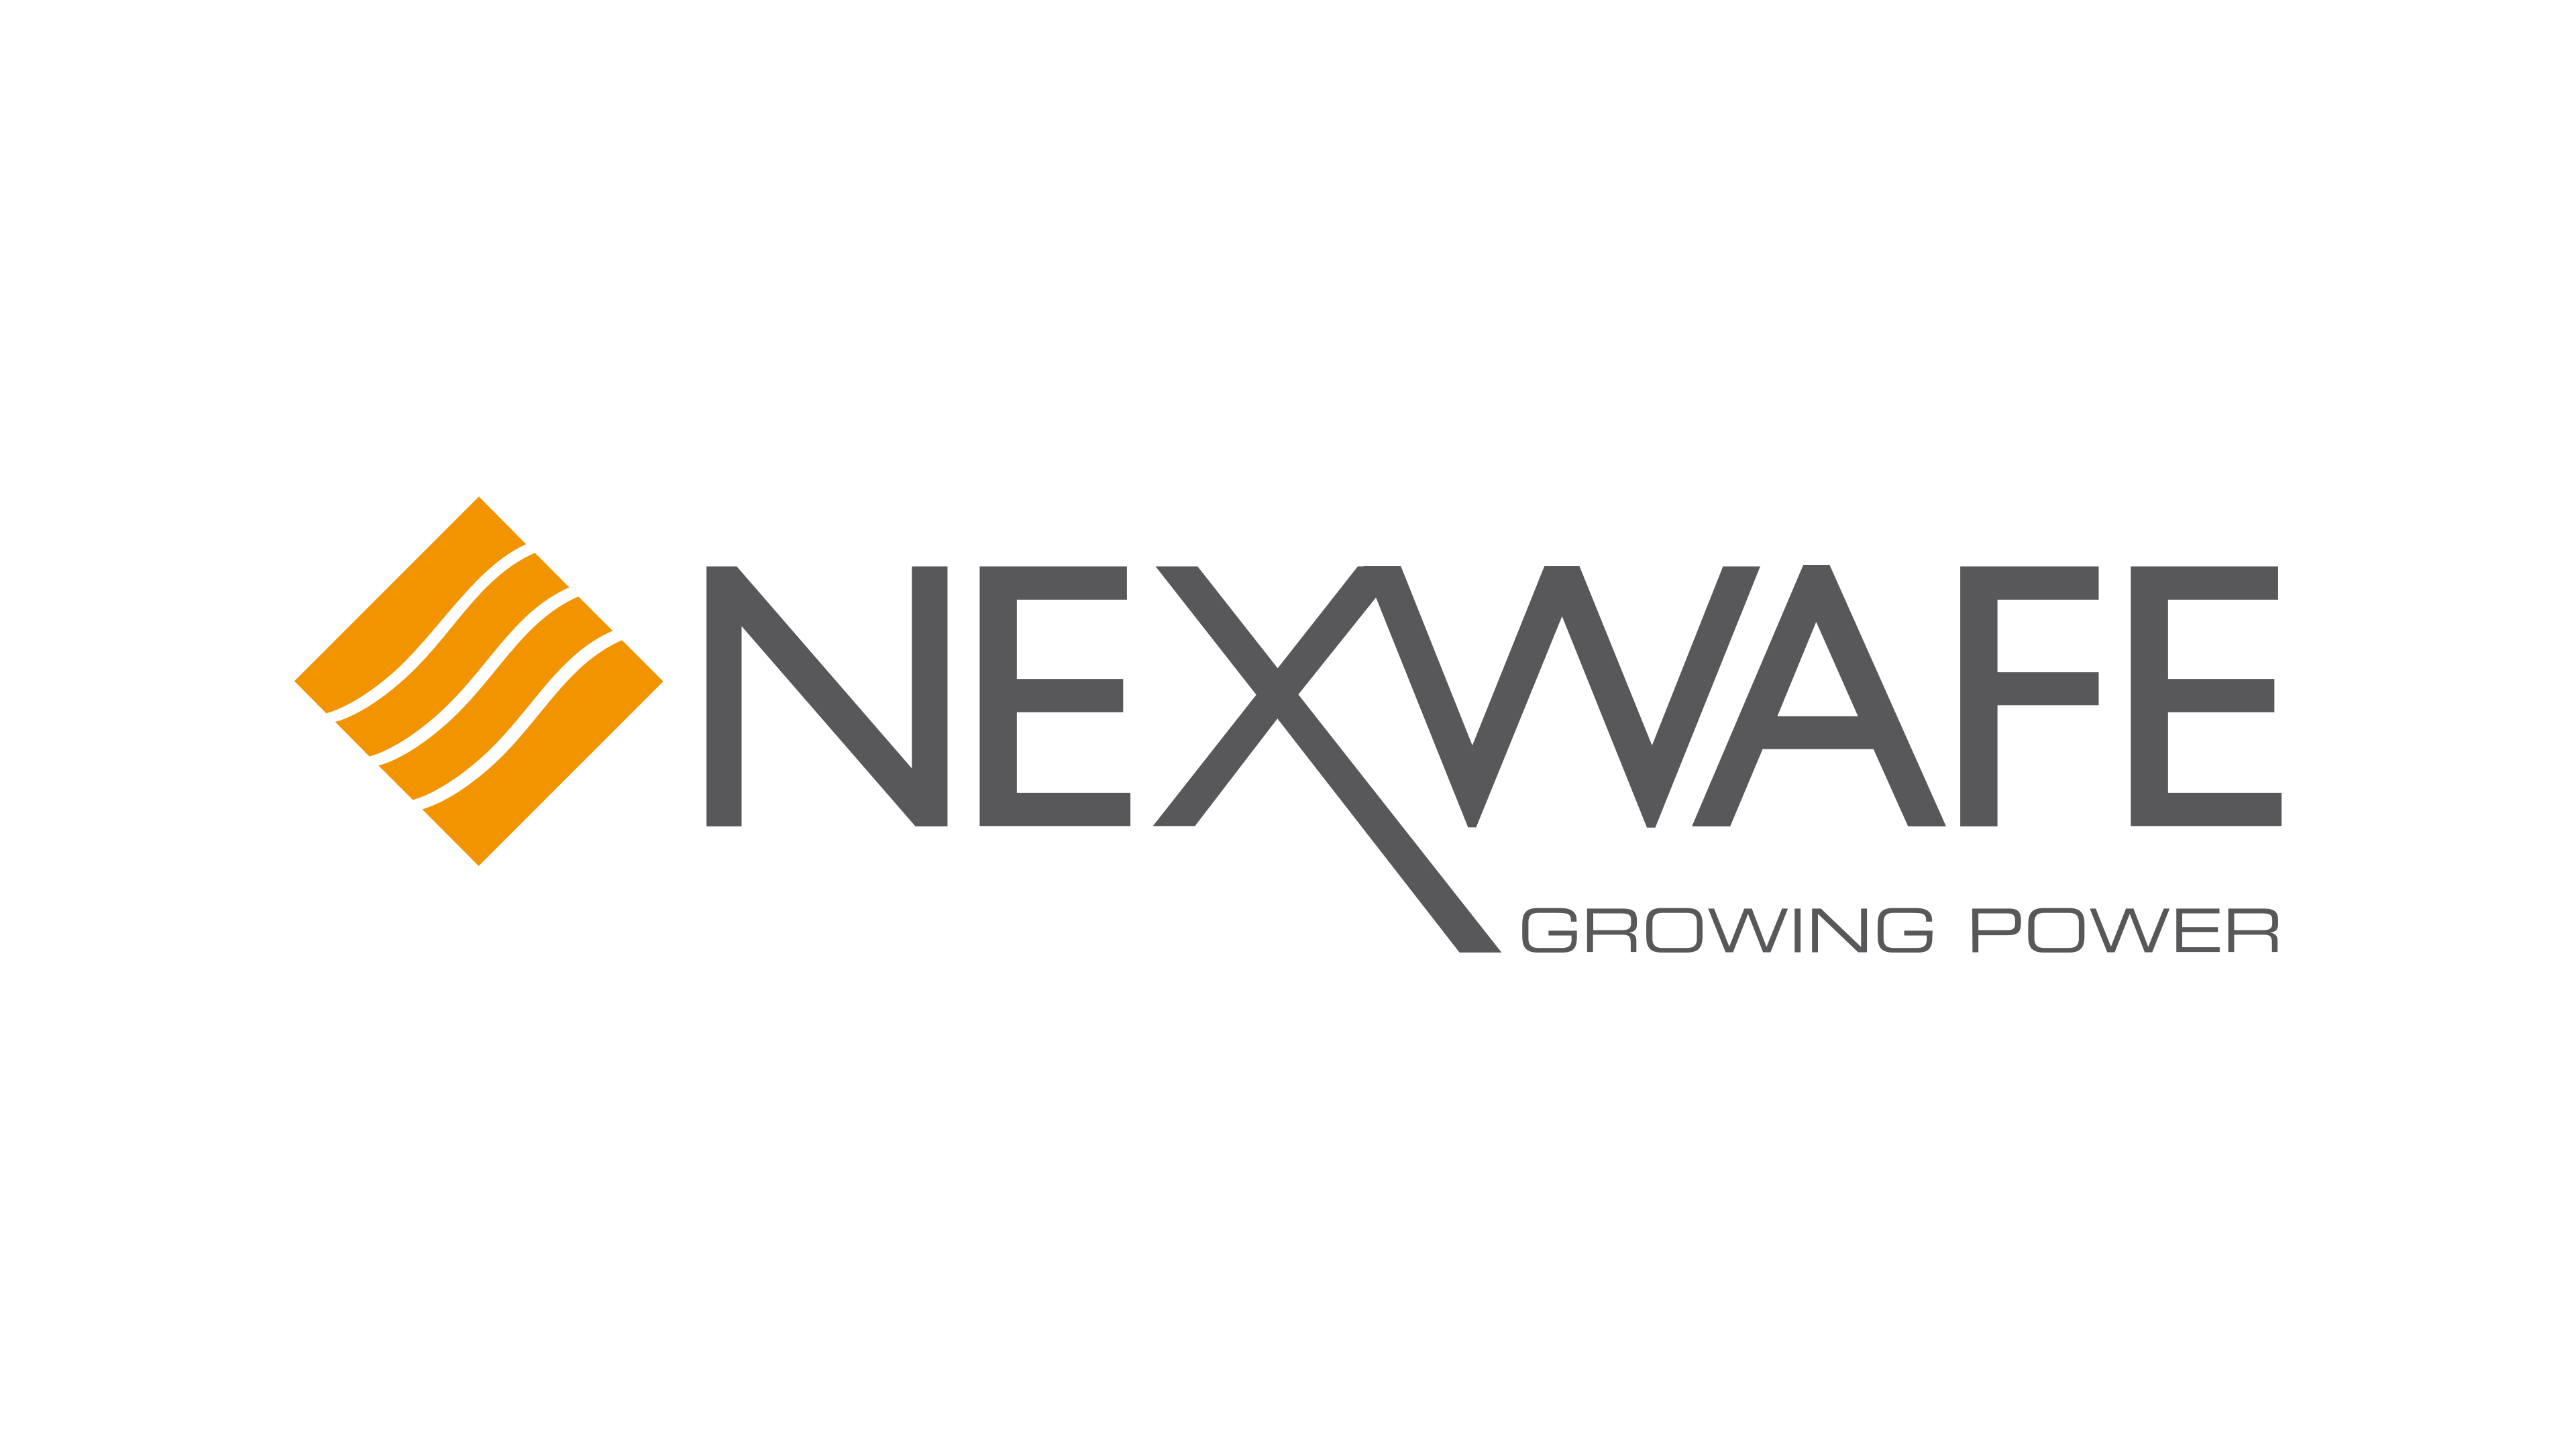 NexWafe GmbH